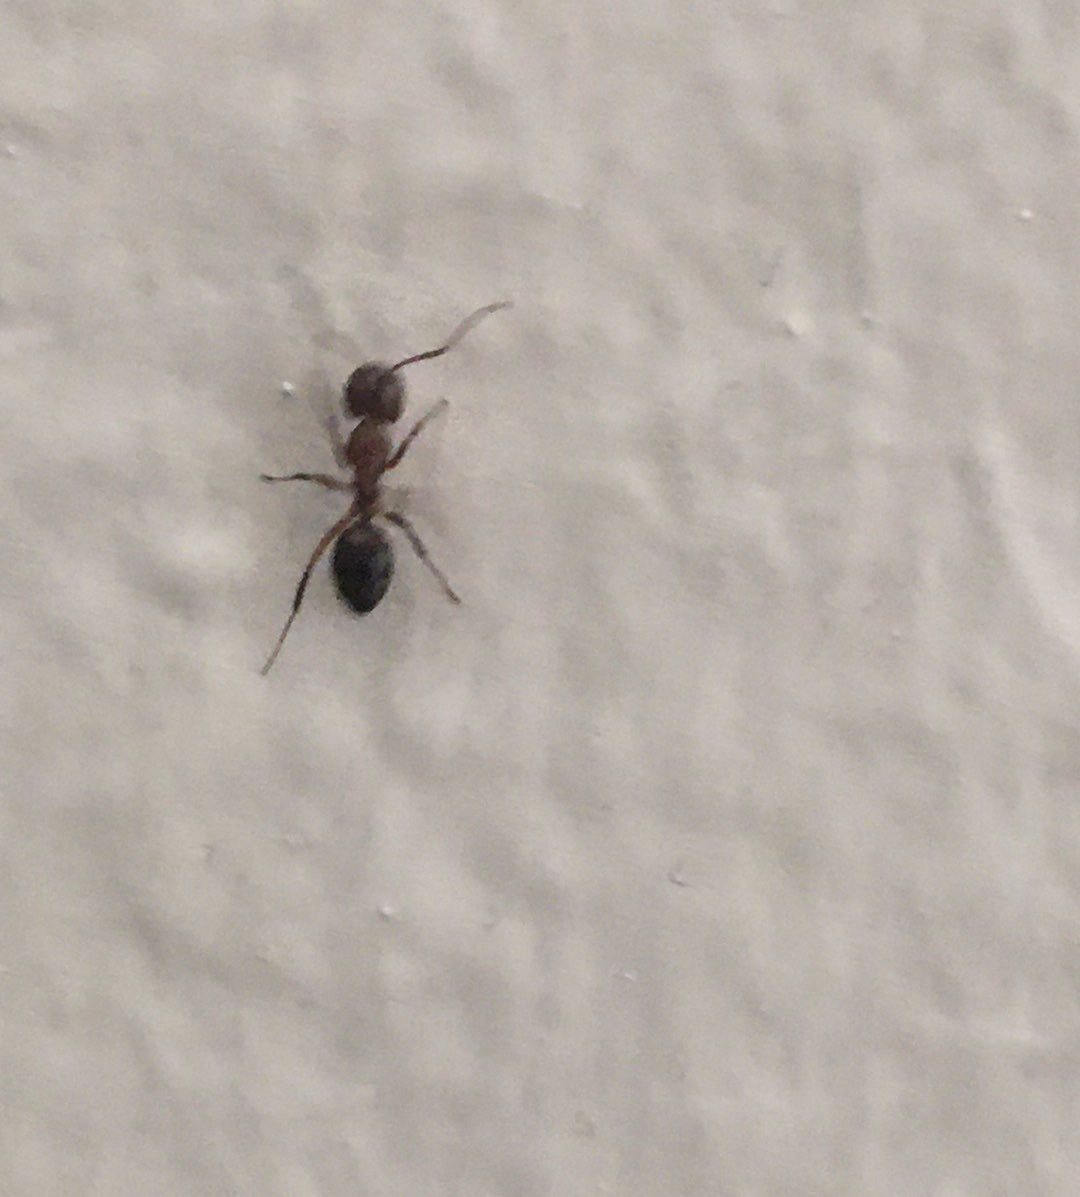 Ant climbing a wall. 